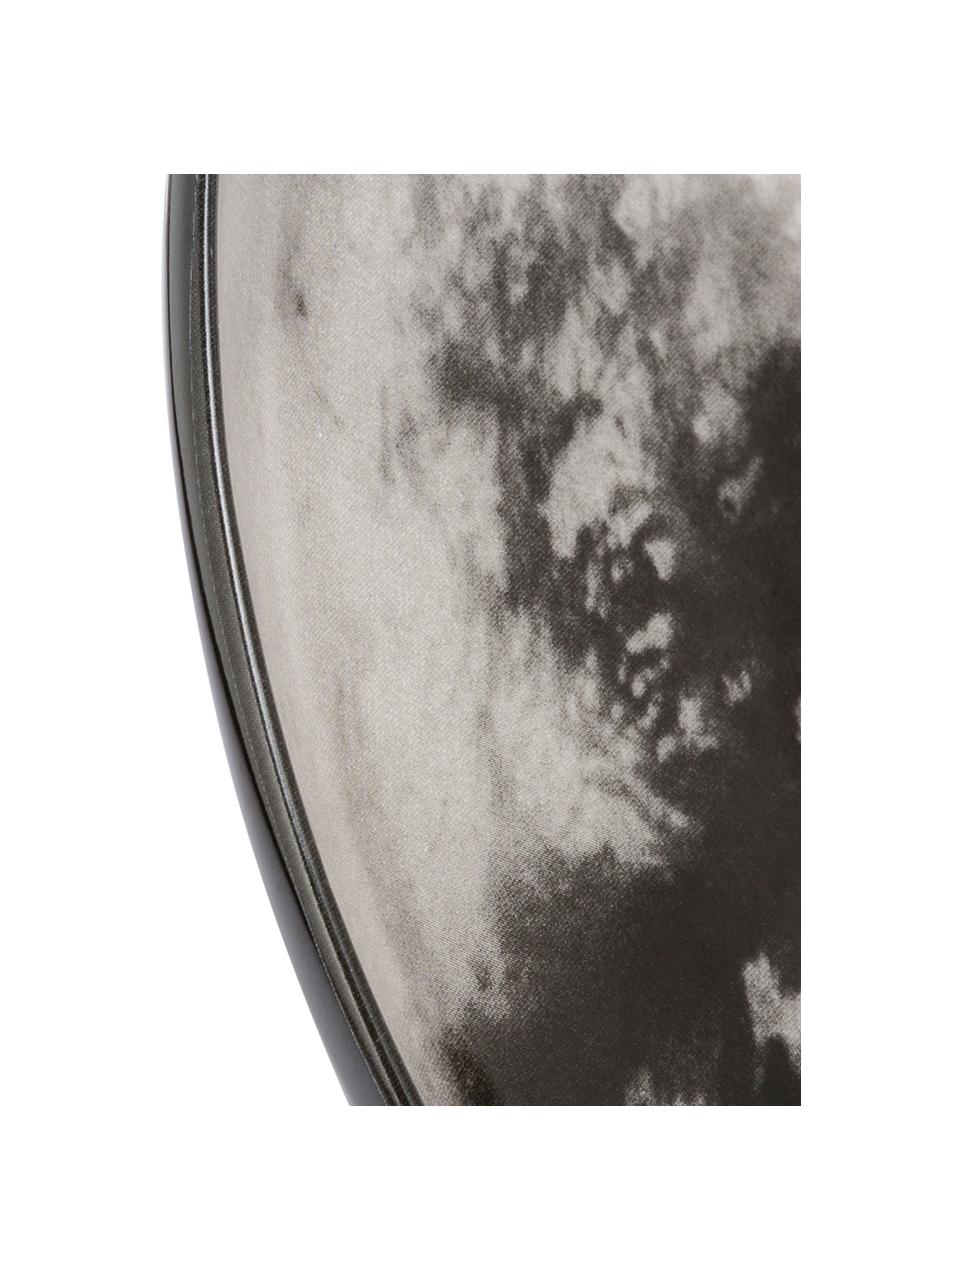 Talerz duży Cosmic Diner Titan, Porcelana, Szary, Ø 26 cm